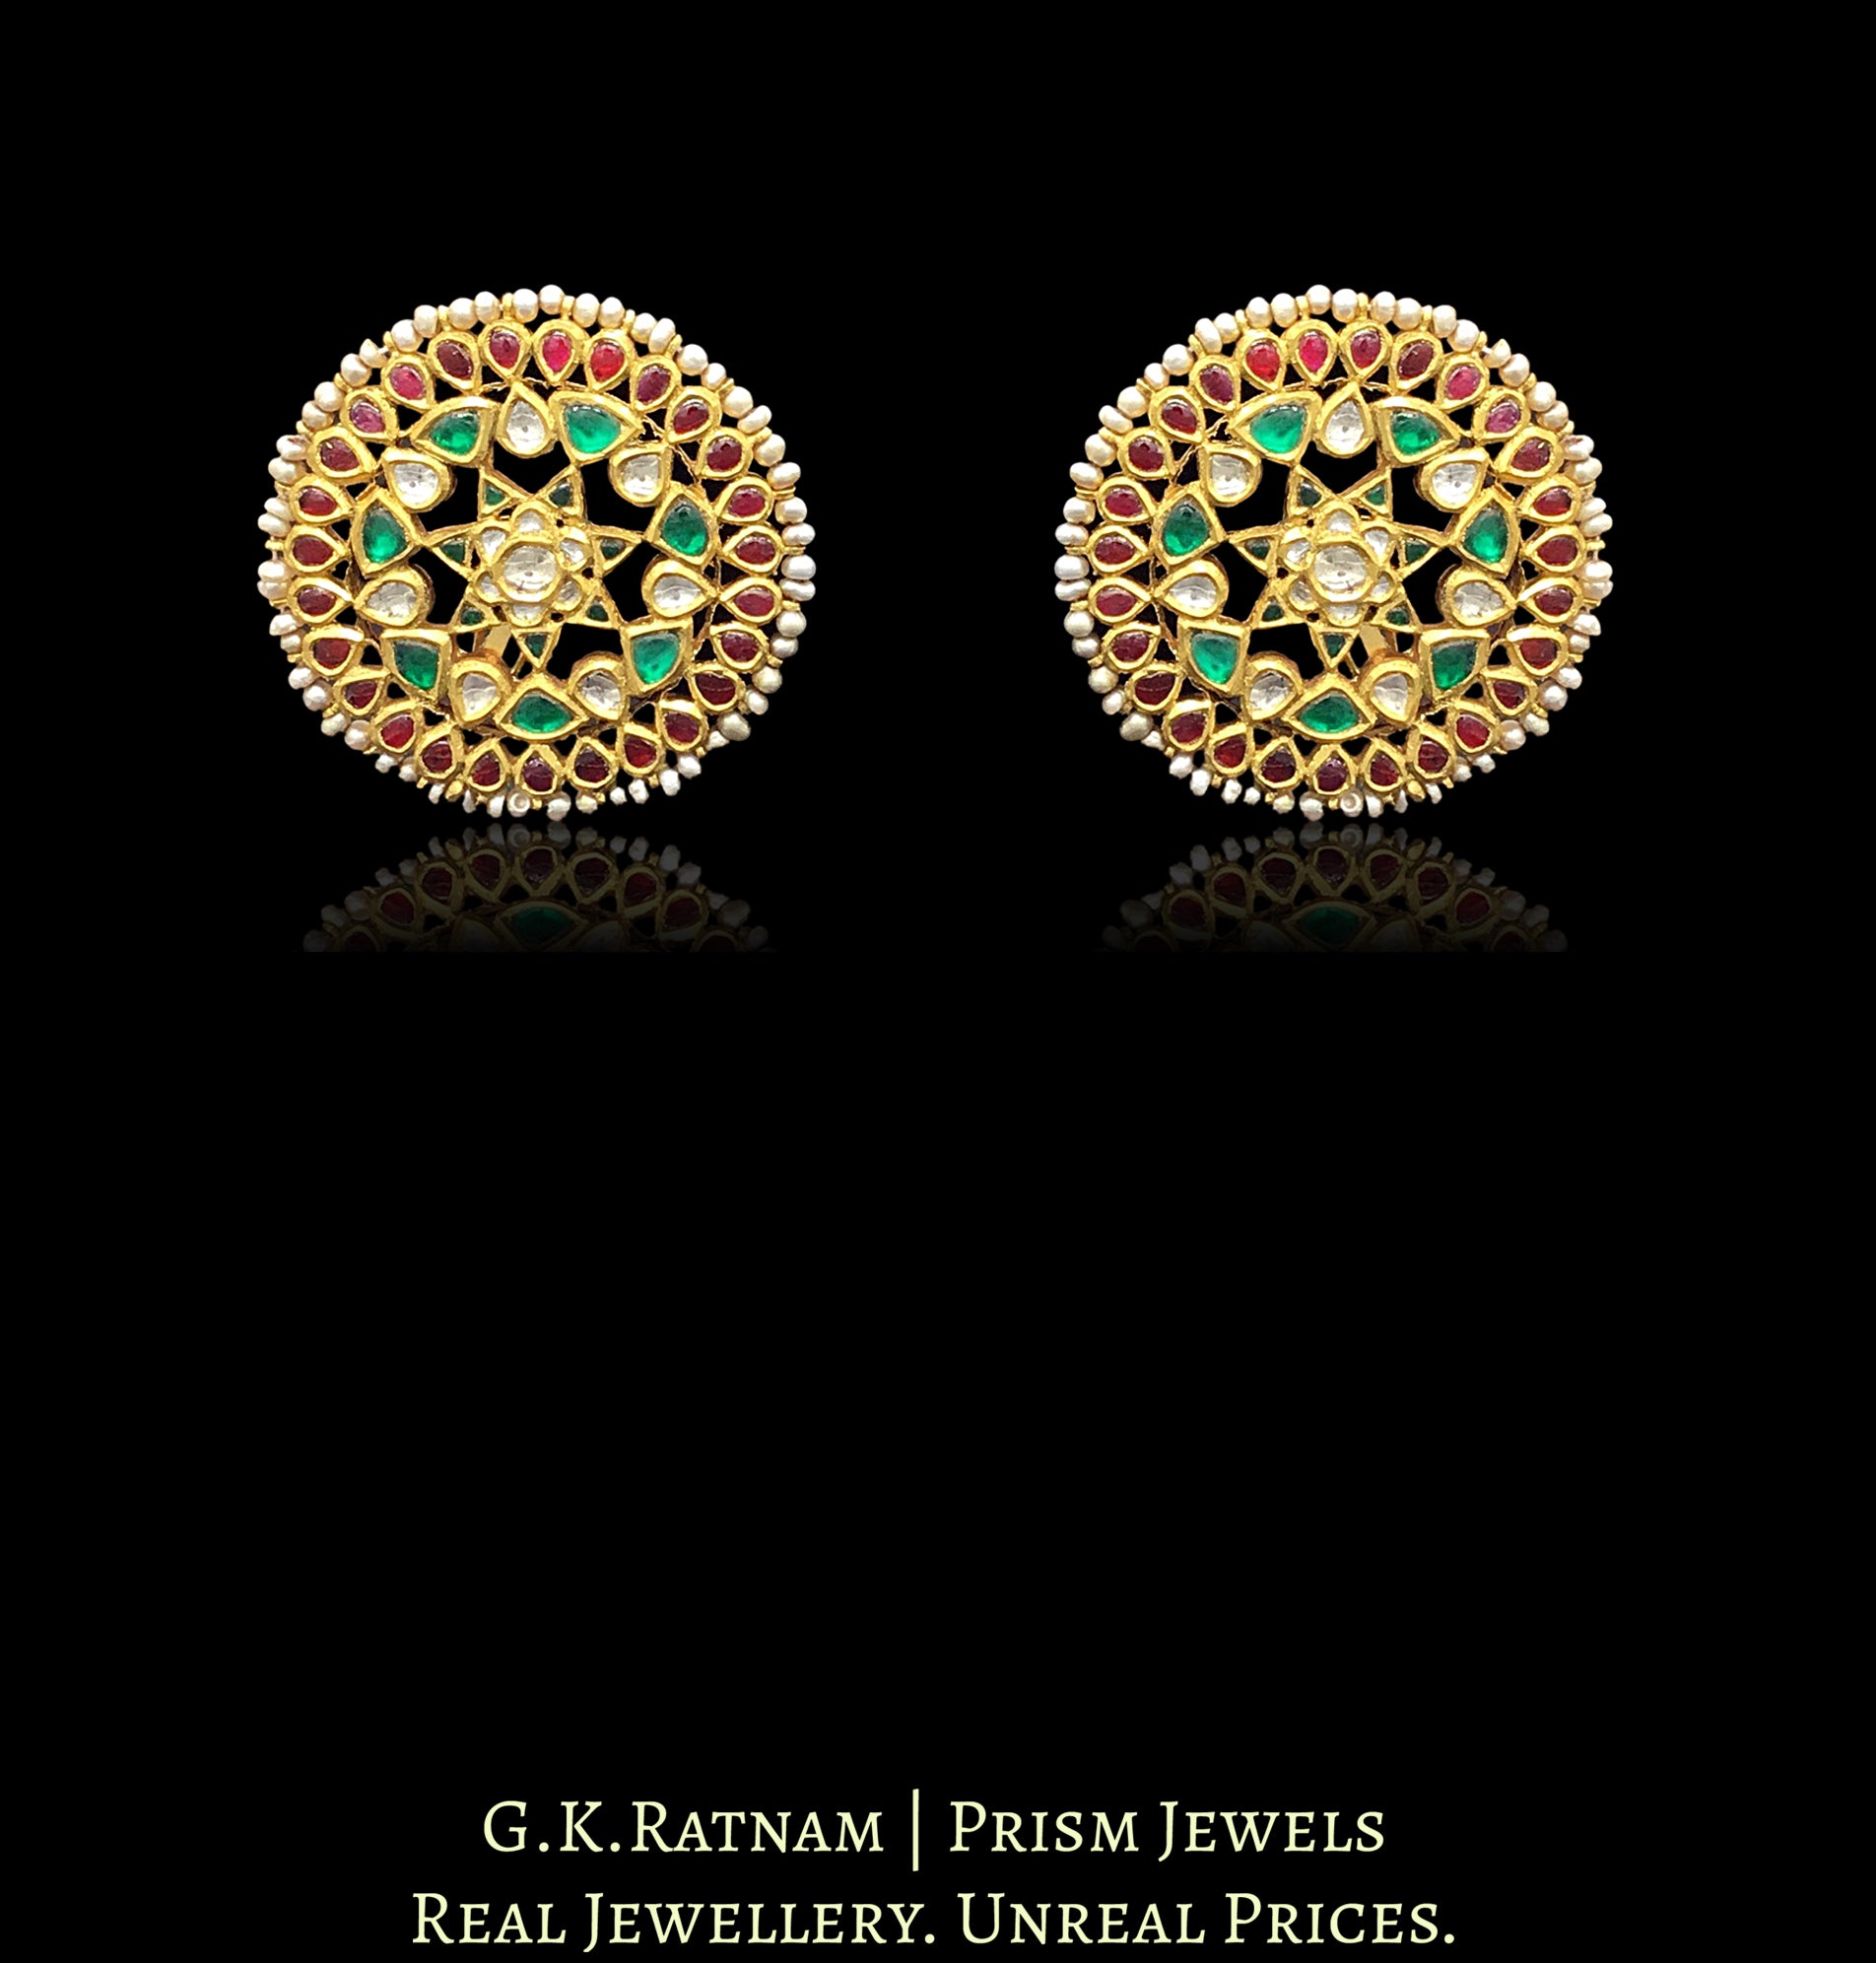 22k Gold and Diamond Polki Karanphool Earring Pair with Rubies and Emeralds - G. K. Ratnam